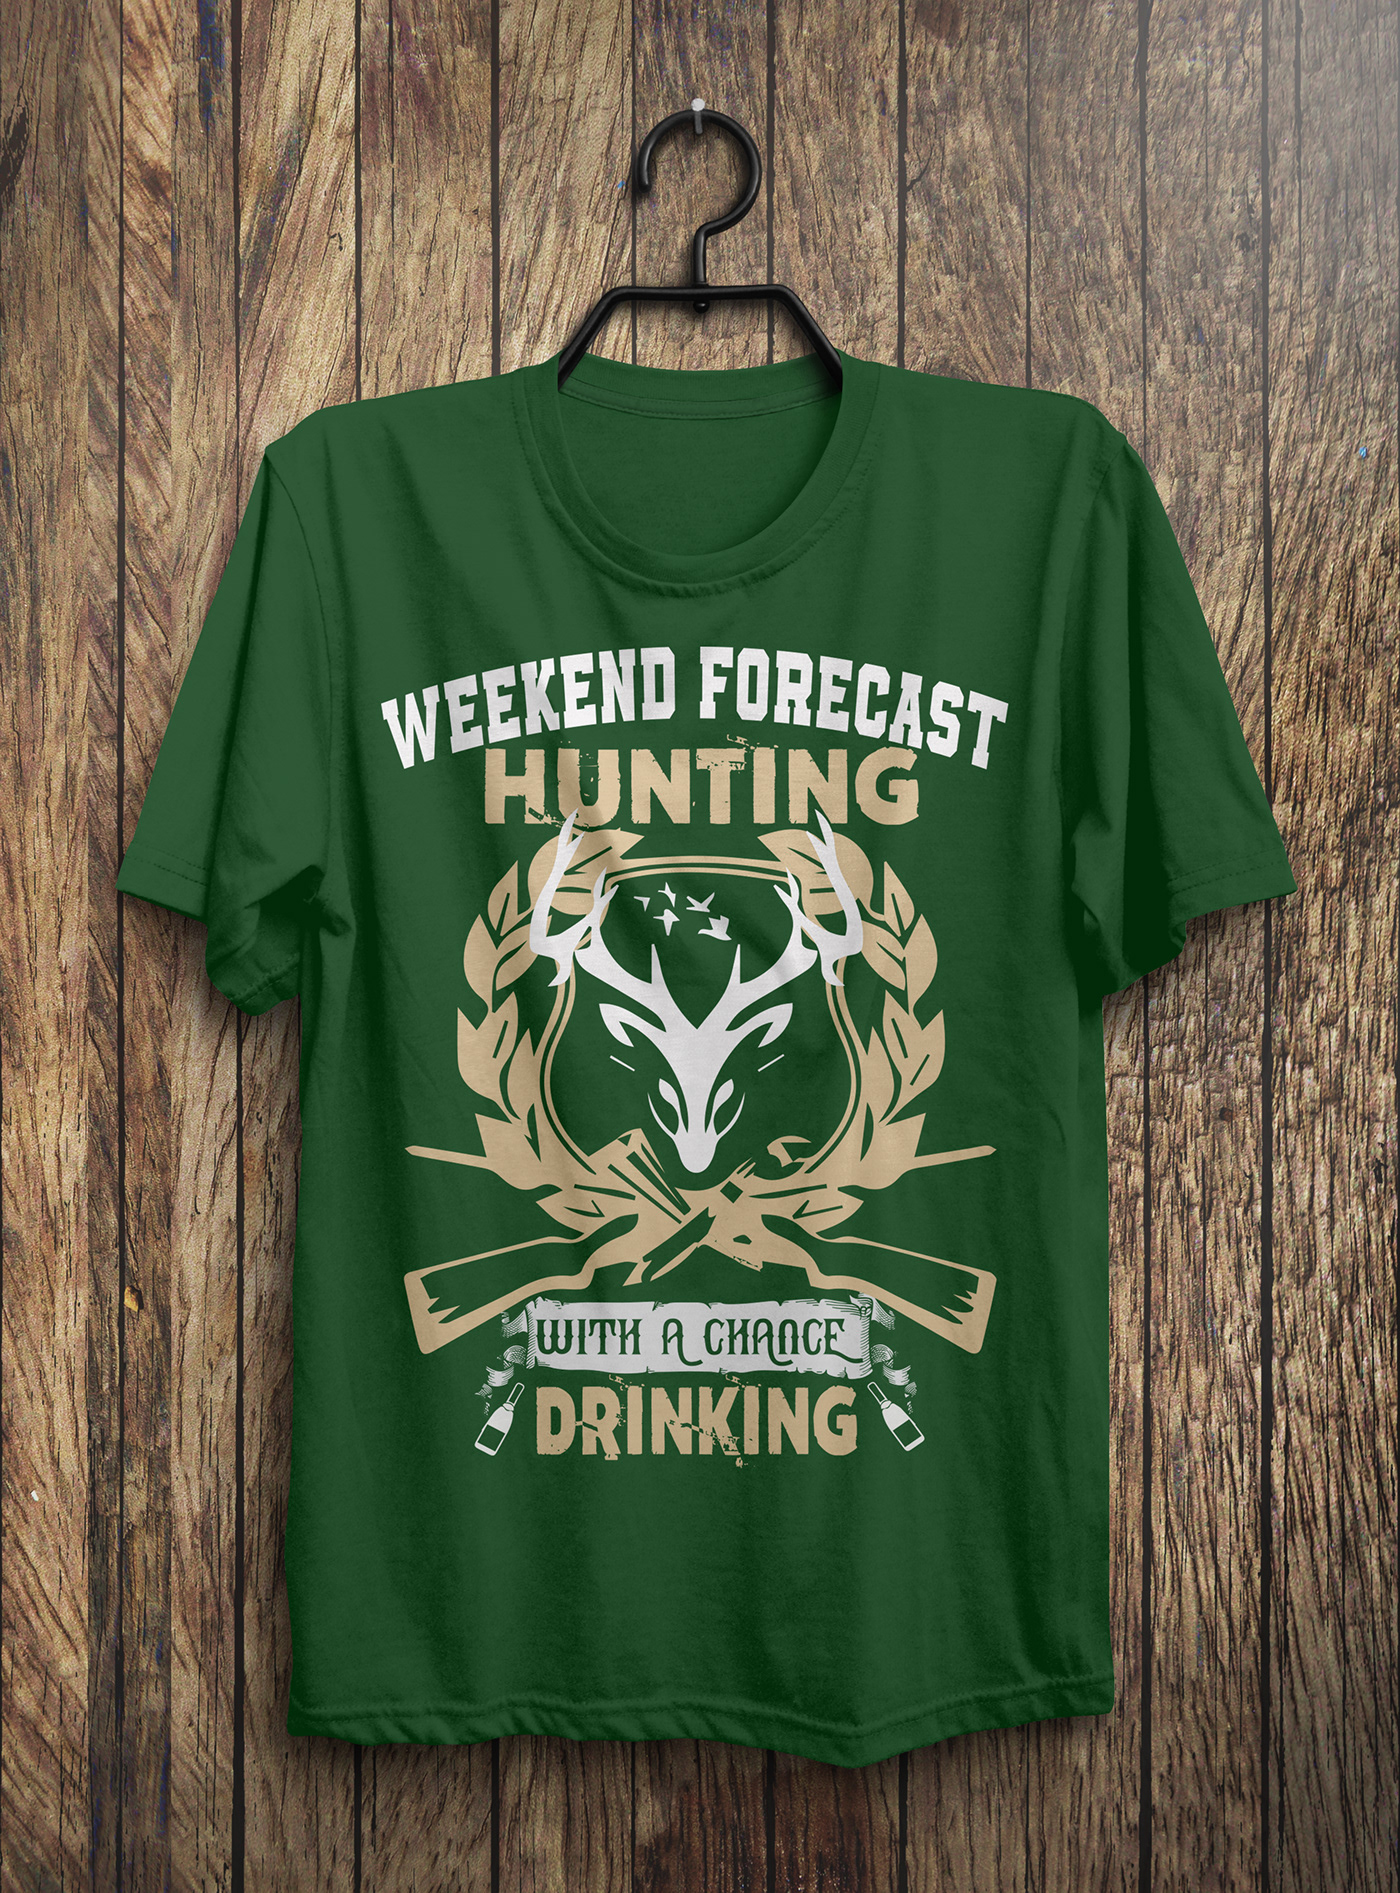 deer hunting shirt design gun t shirt hunter HUNTER BRAND HUNTER HUNTING CLUB HUNTING shirt T SHIRT hUNTING t-shirt t-shirt tshirt